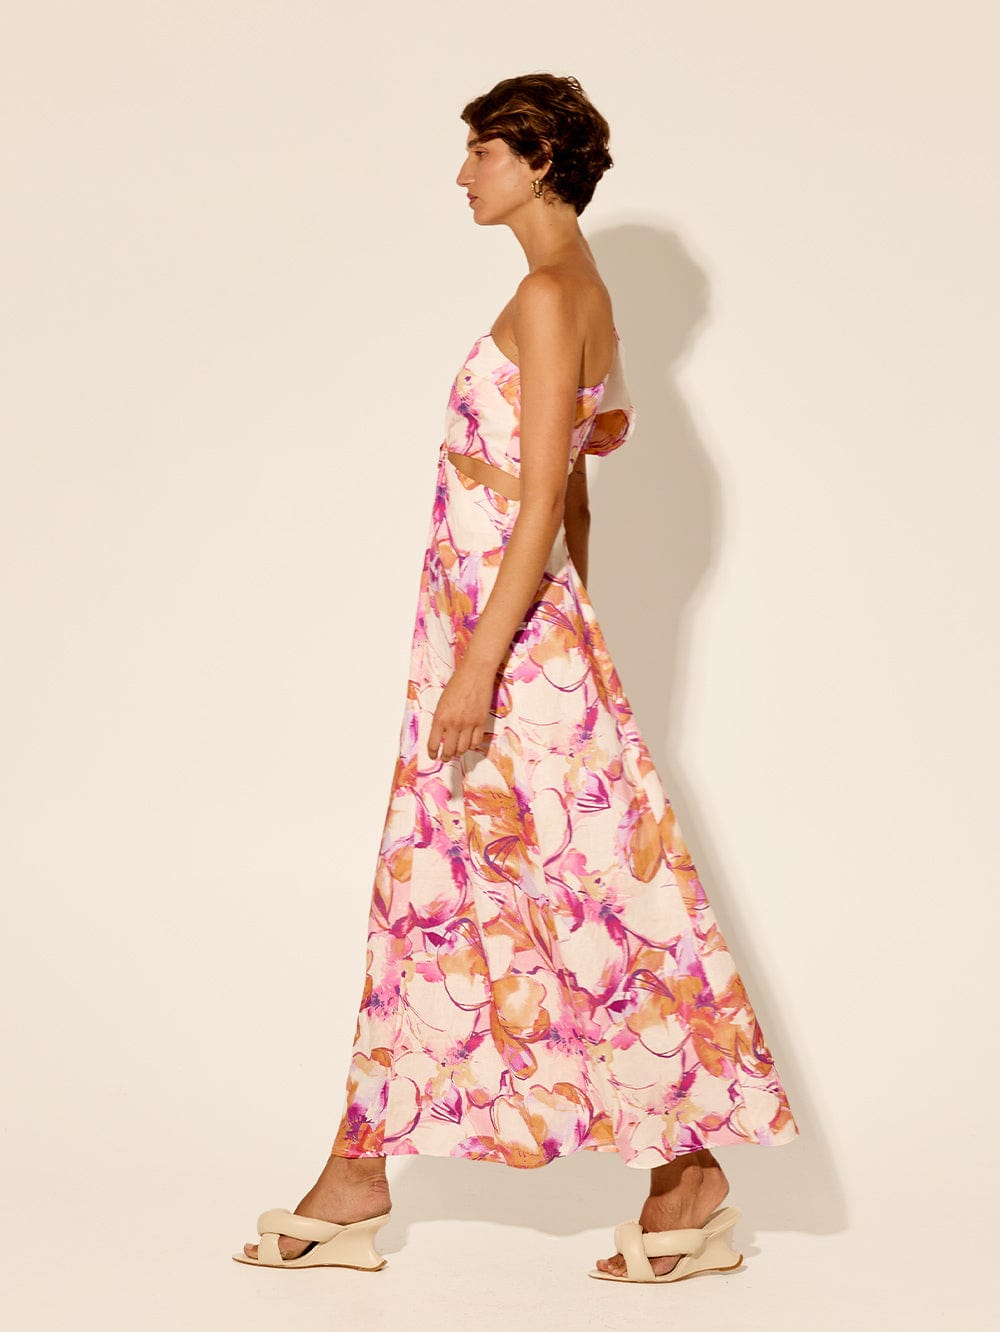 Shop Midi Dresses: Floral, Casual & More | KIVARI International